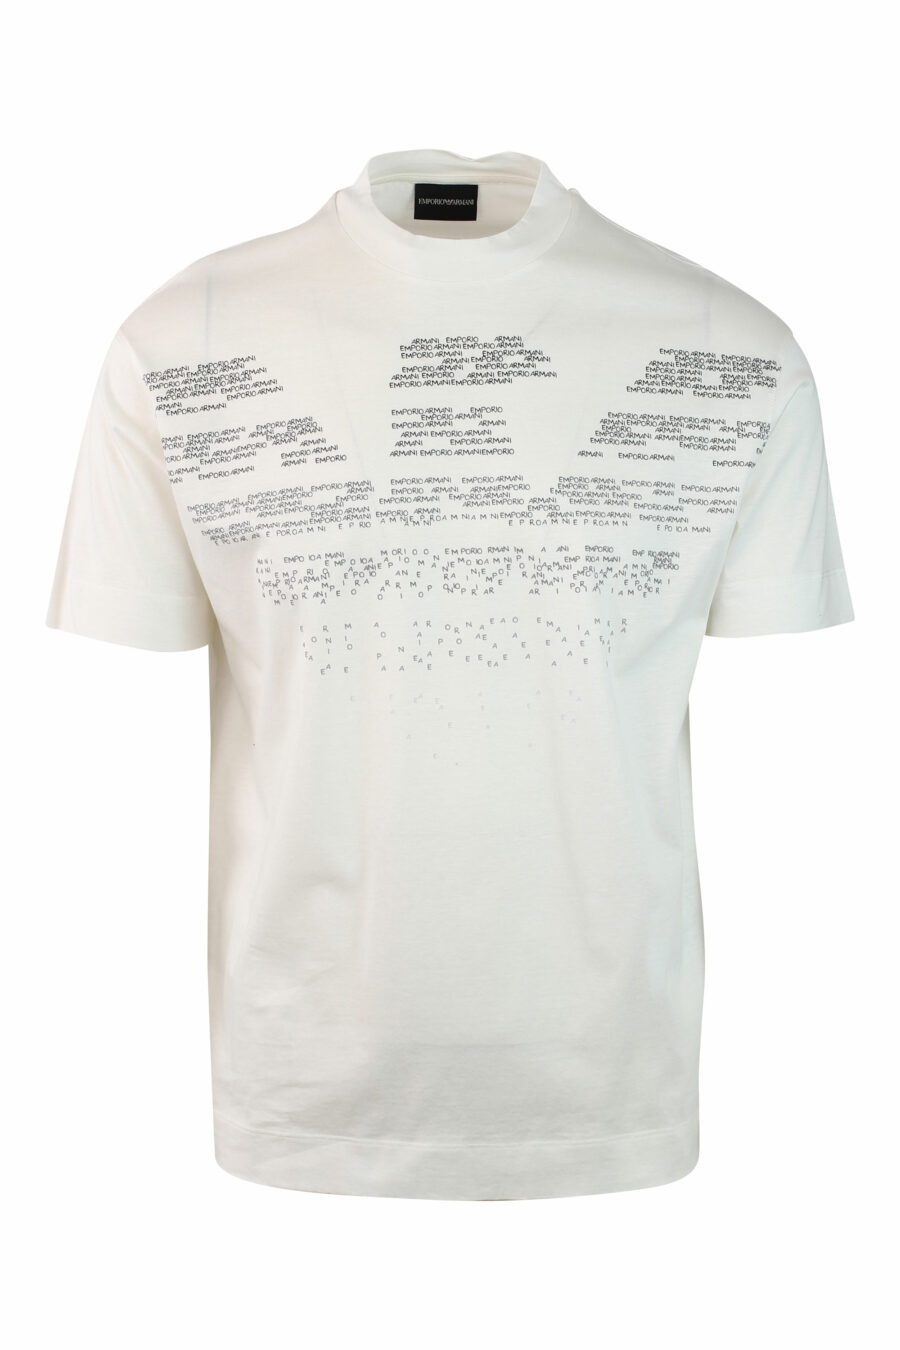 White T-shirt with degradé eagle maxilogo - IMG 0139